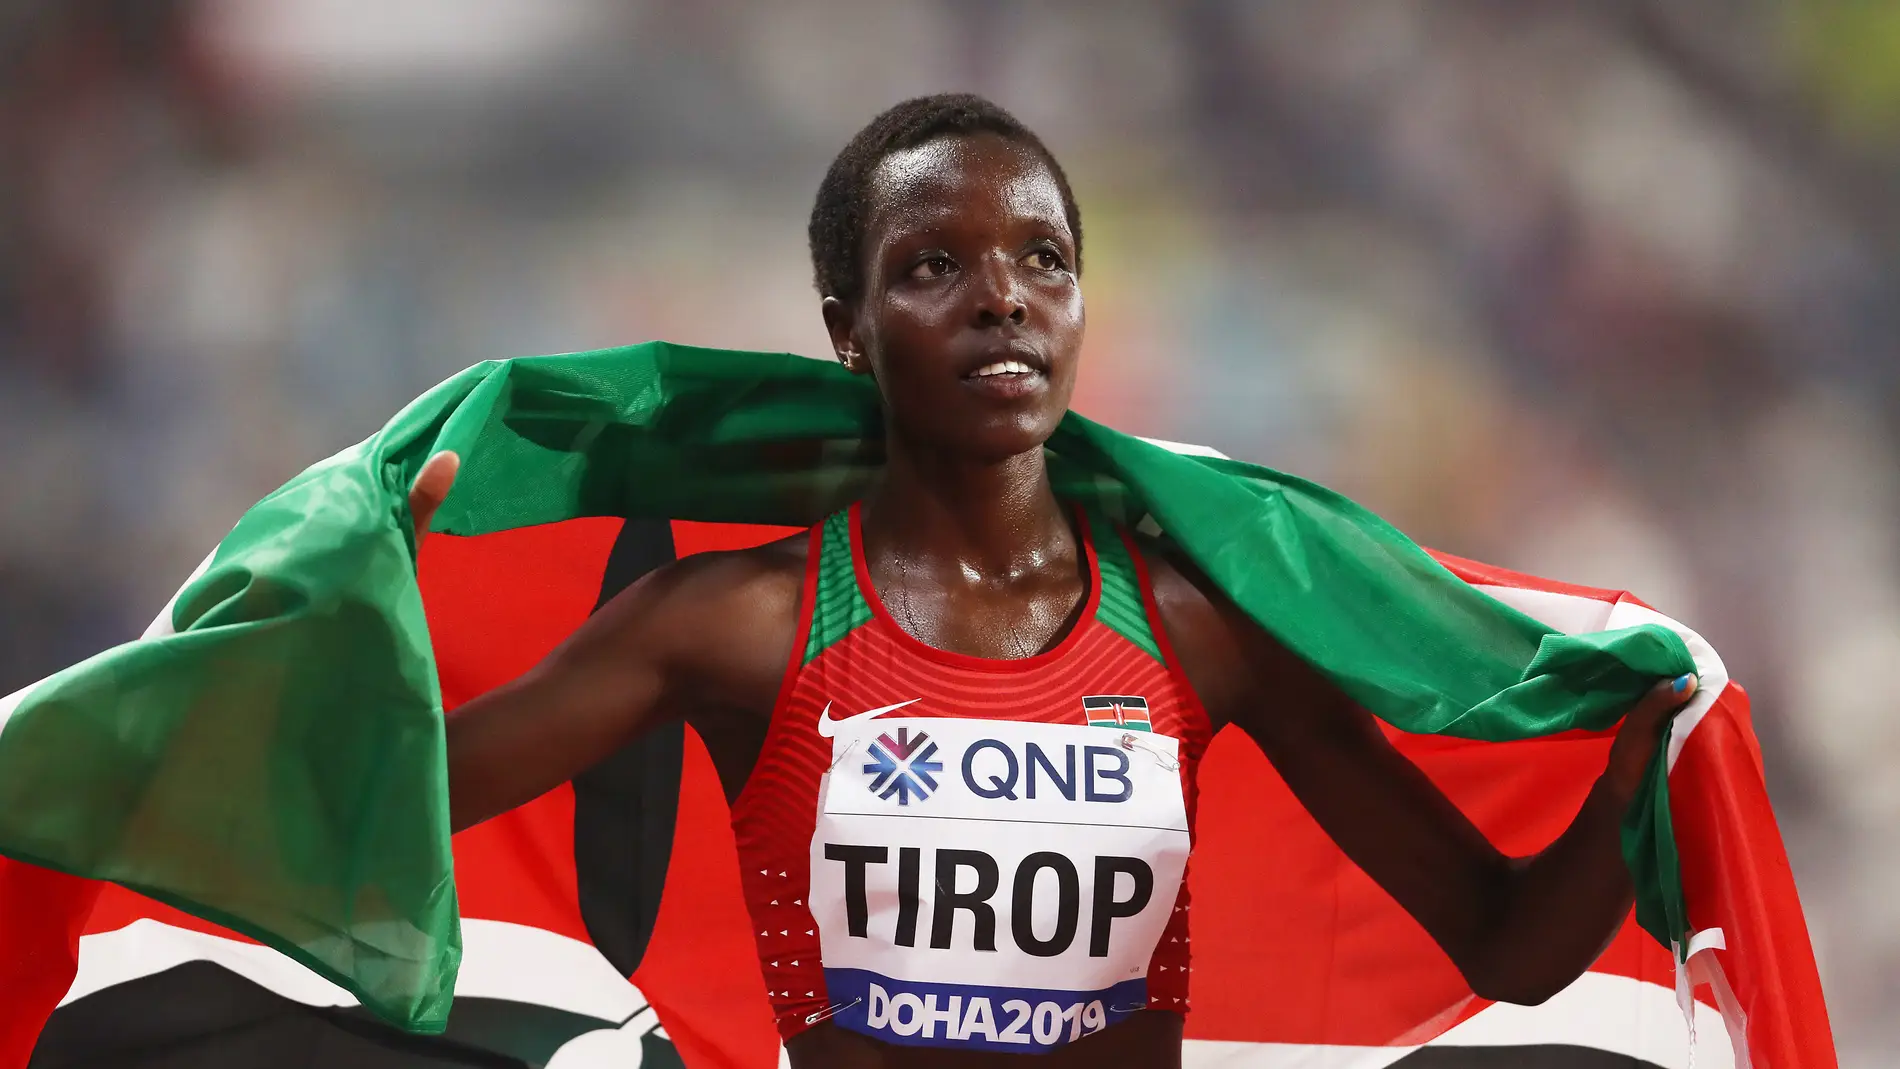 La atleta keniata Agnes Jebet Tirop